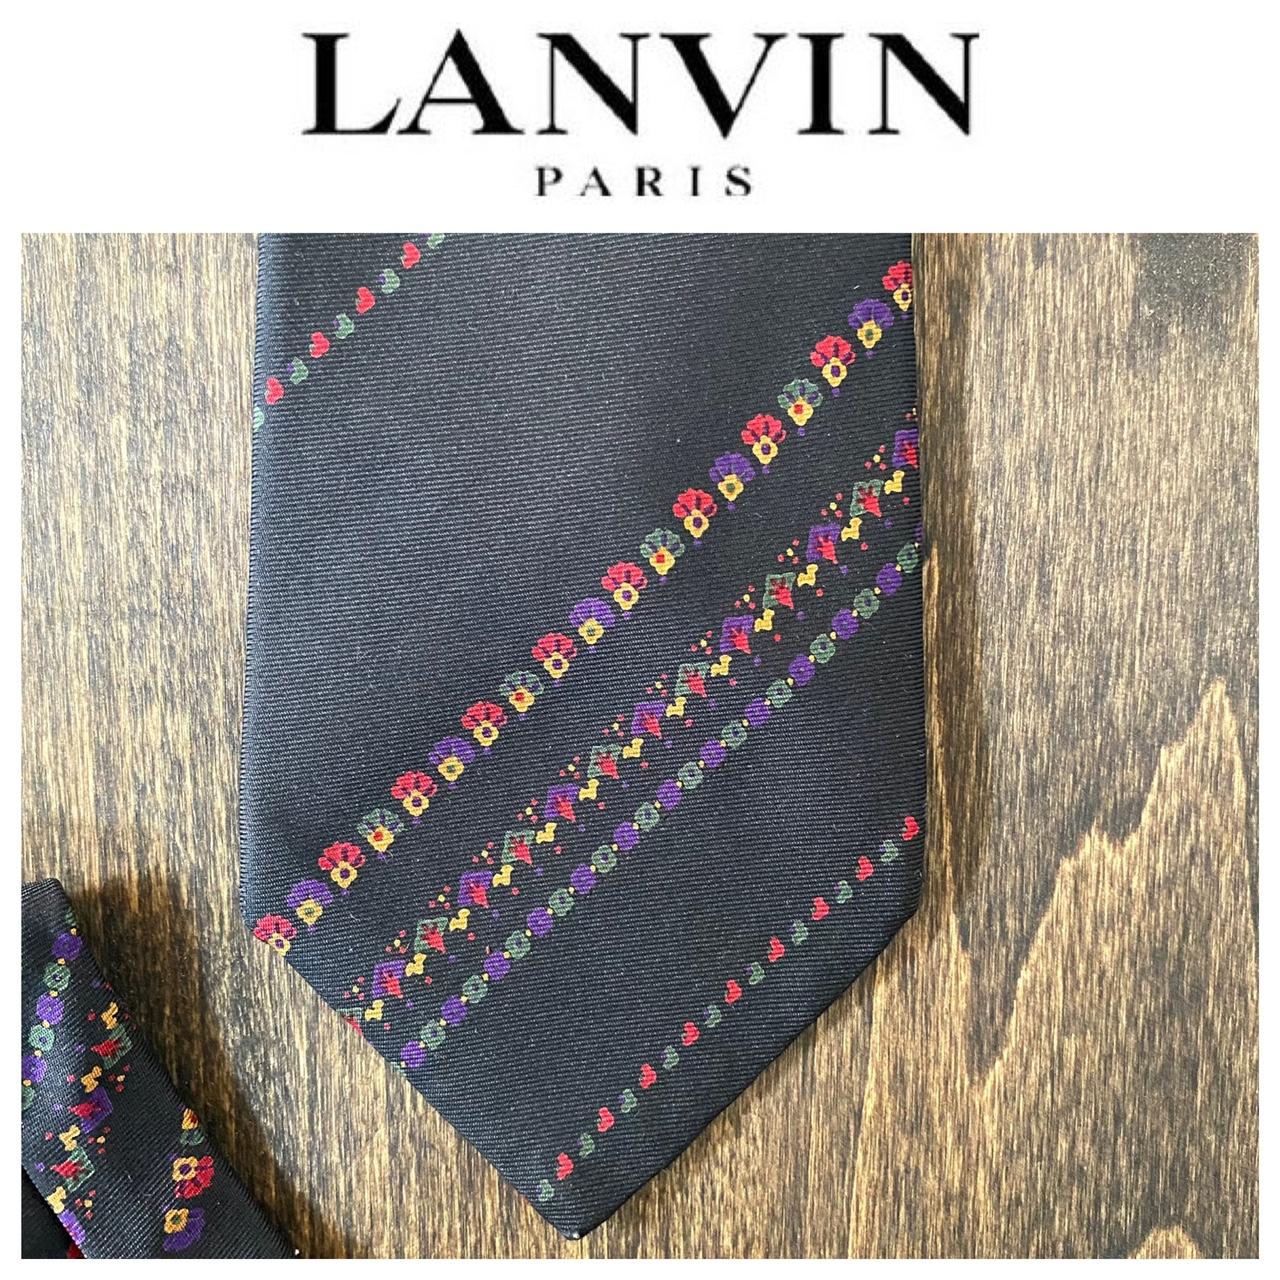 Lanvin Men's Black and Navy Accessory